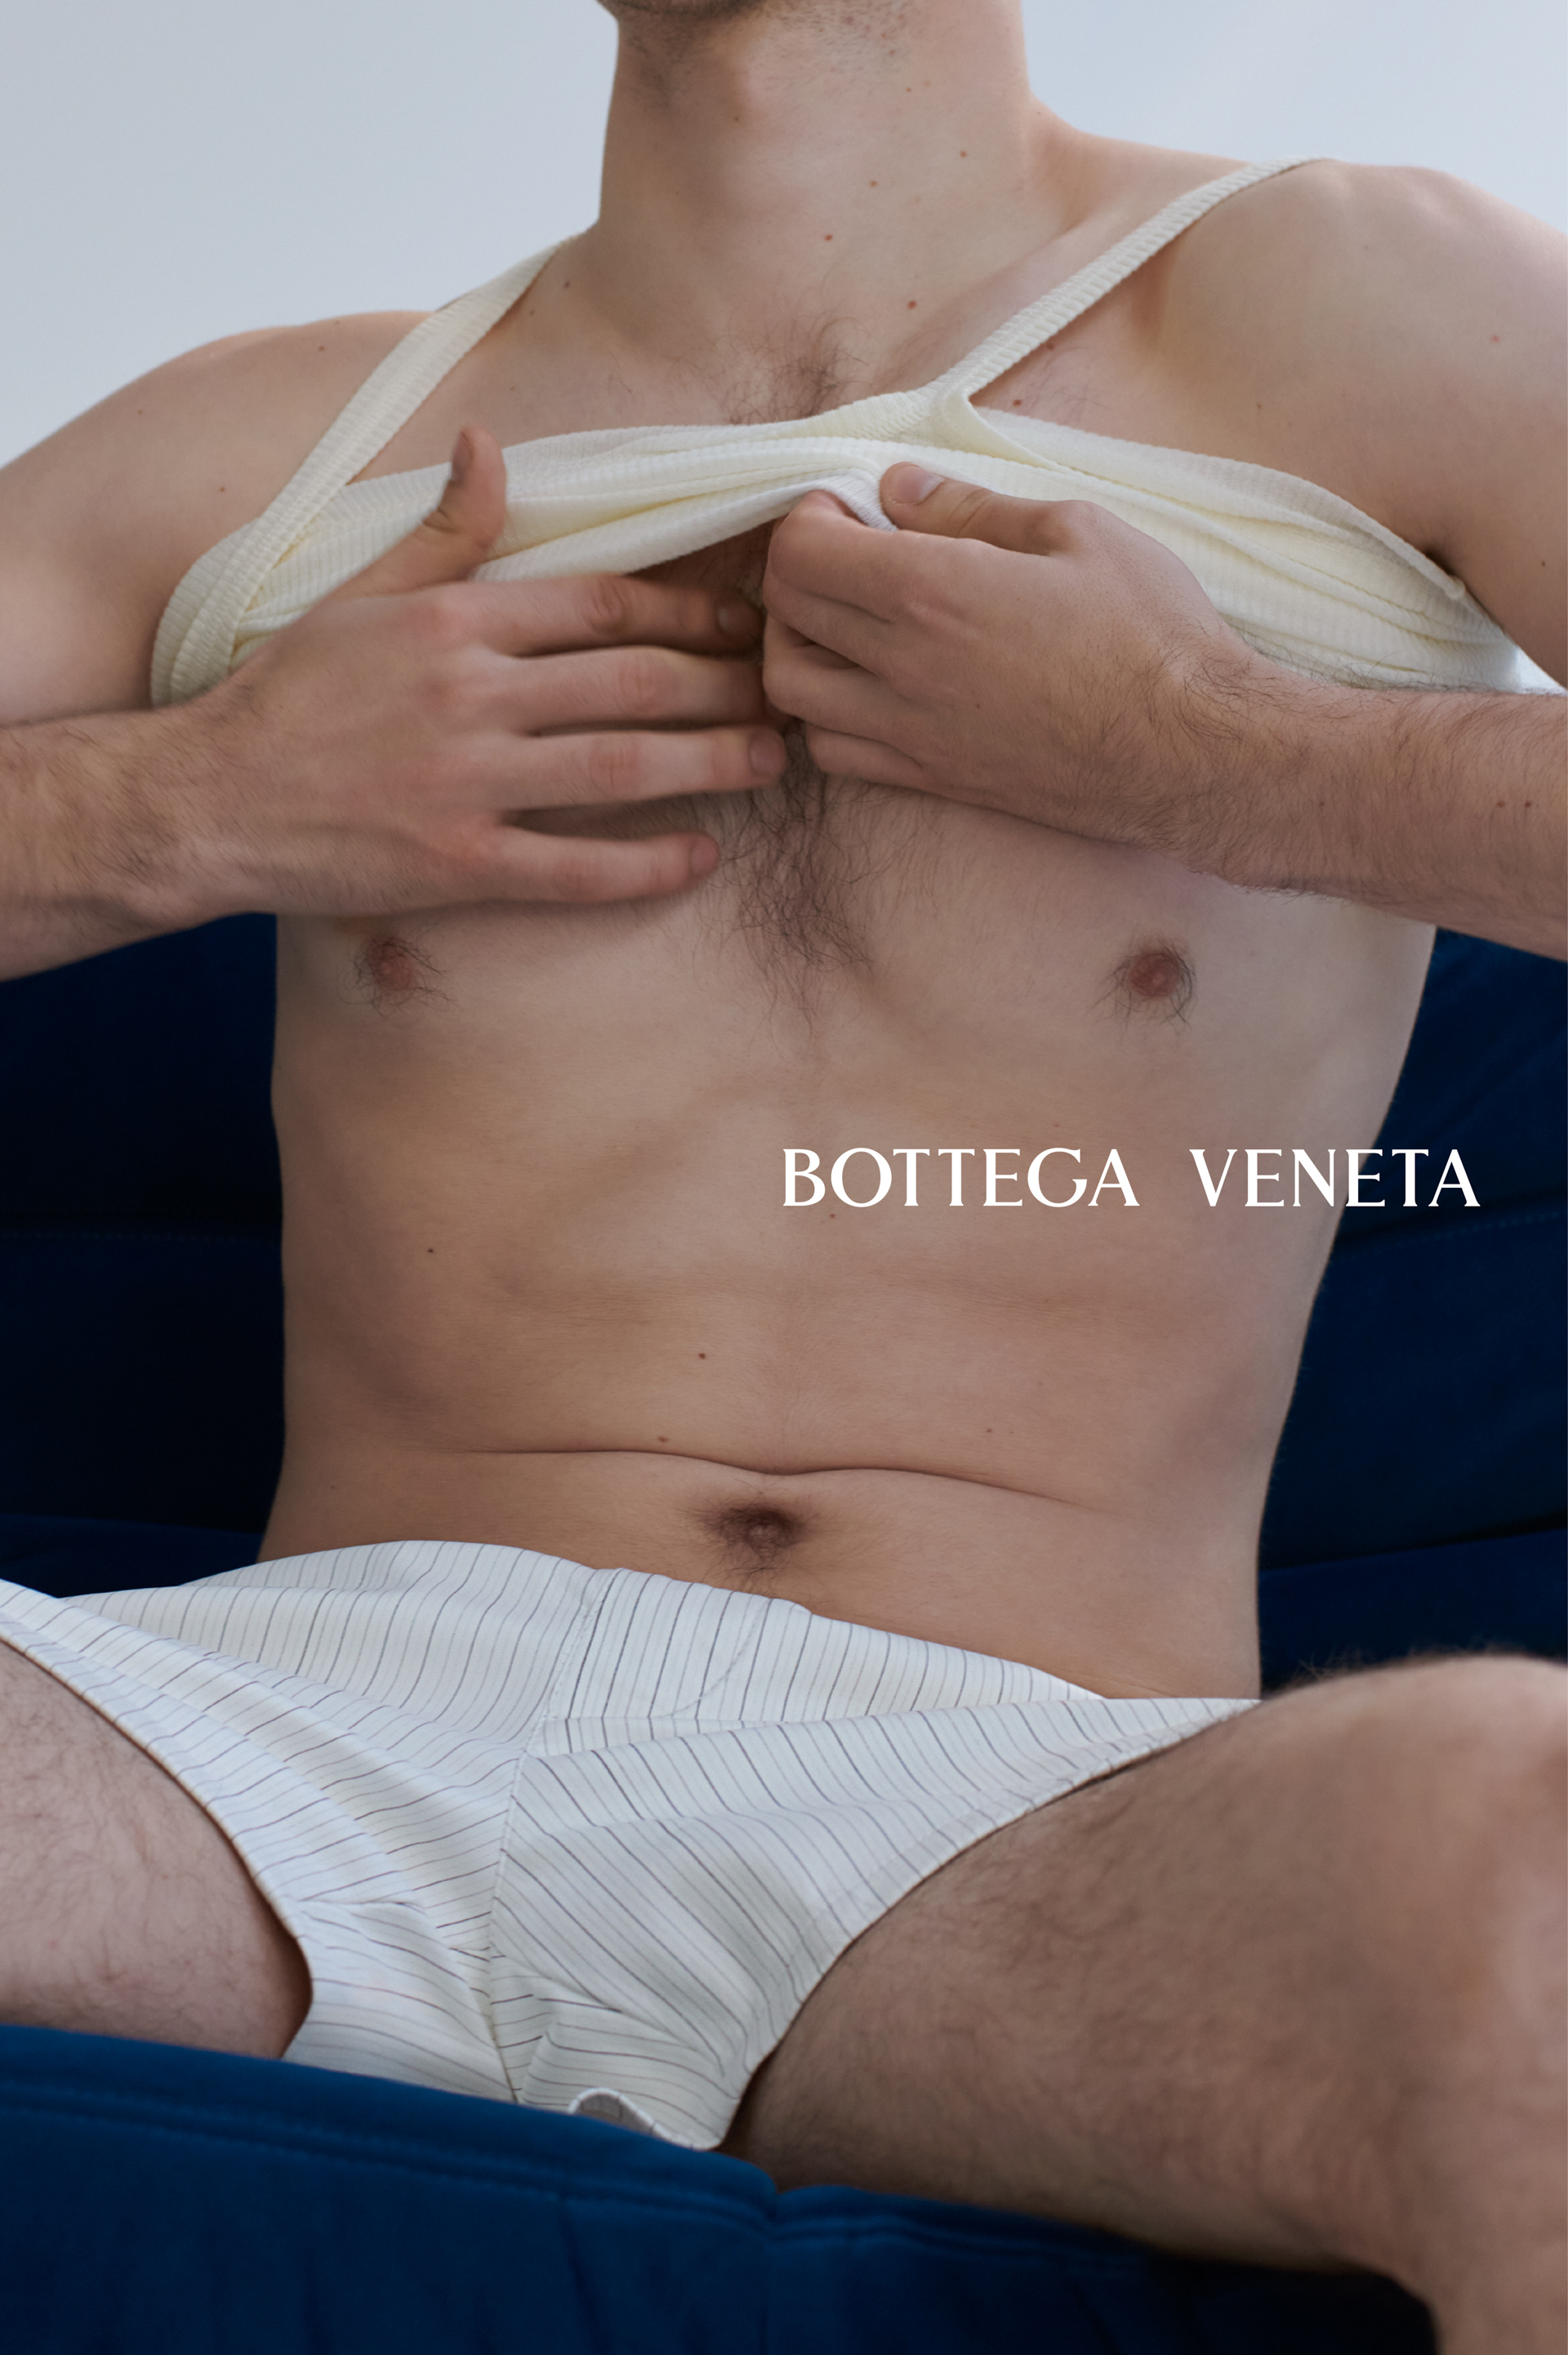 compressProd Bottega Veneta Butt Magazine 32 FINAL for screen wiithout border3